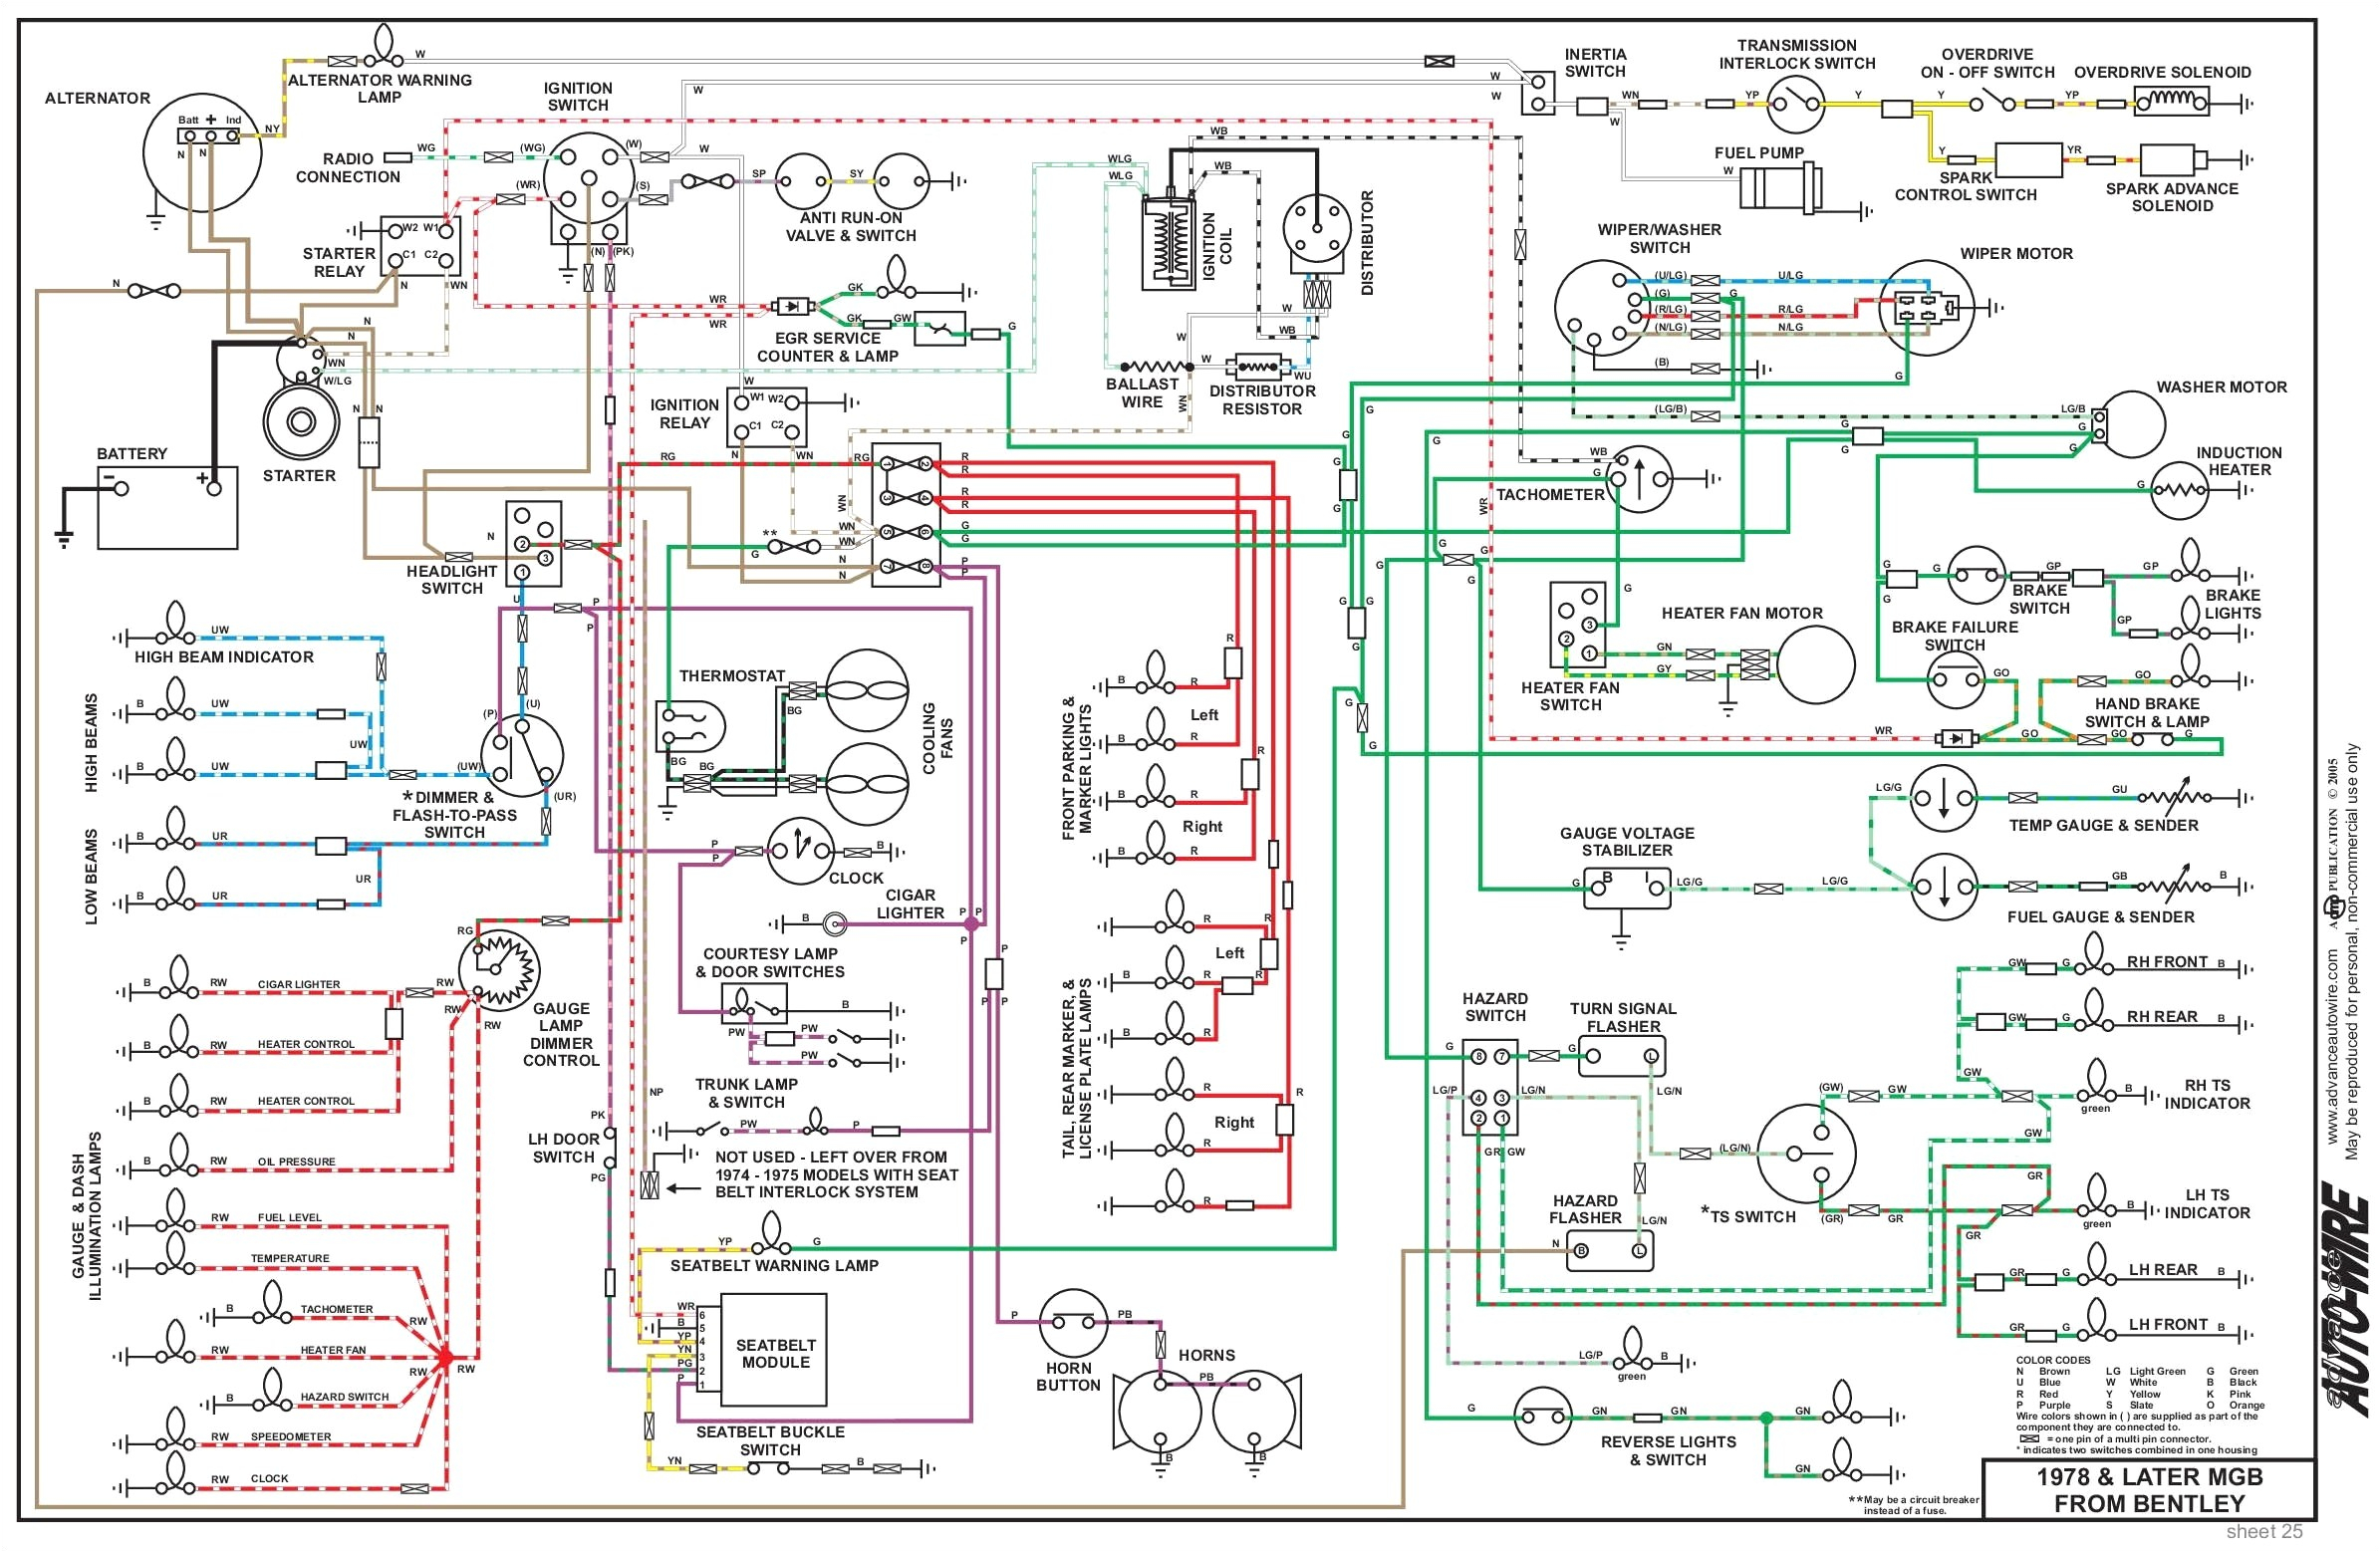 1977 mgb wiring harness diagram wiring diagram database 1977 mgb wire harness diagrams wiring diagram database